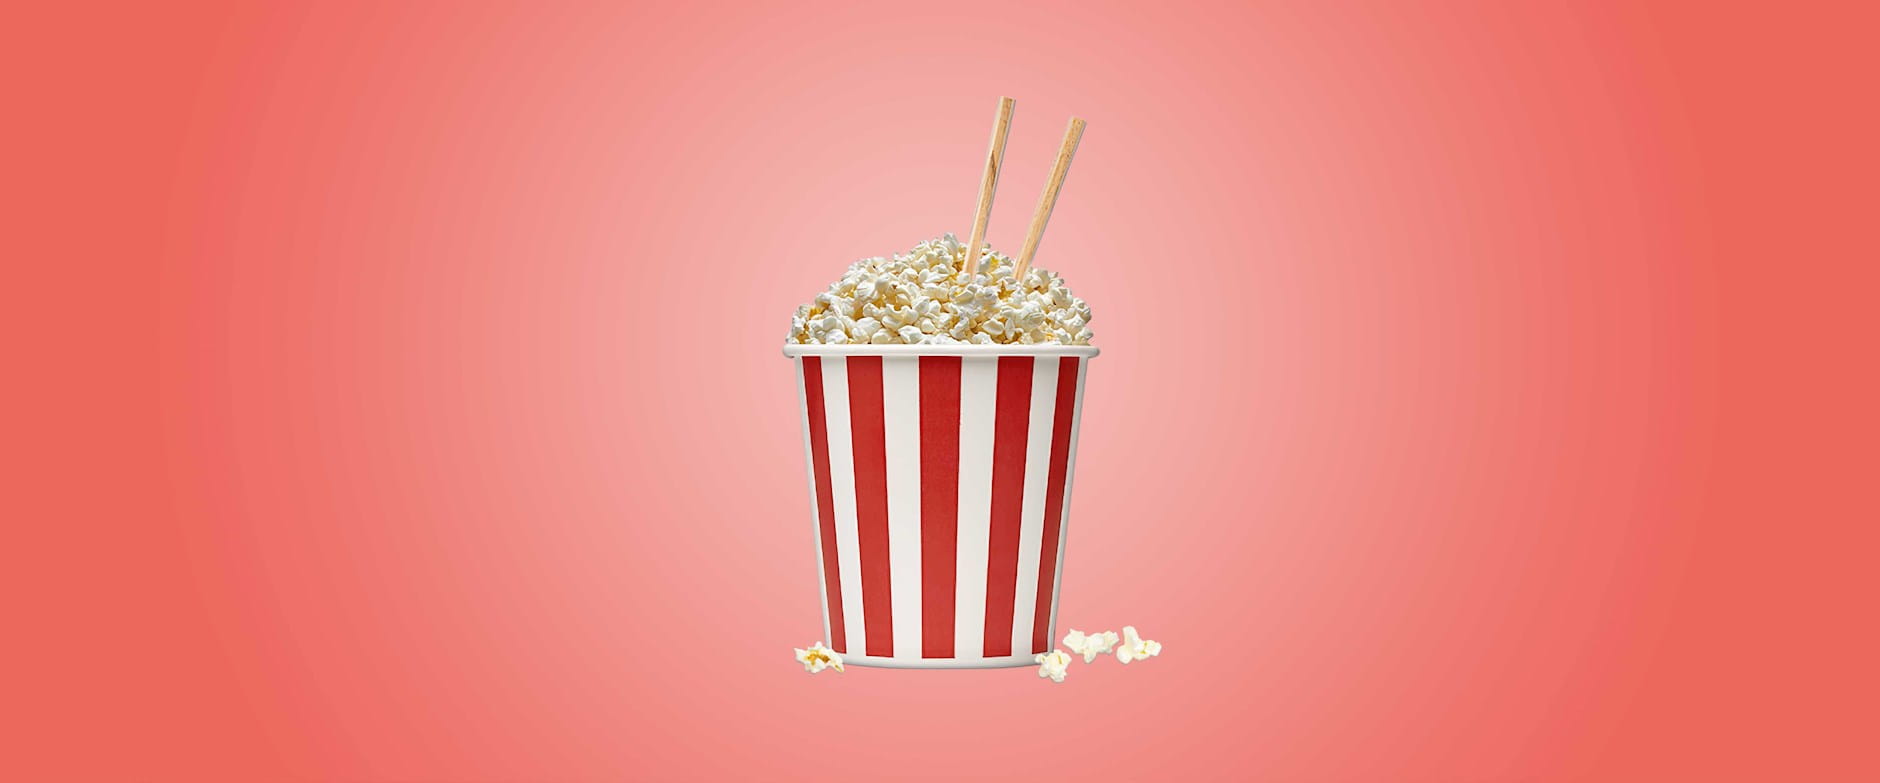 Popcorn in bucket with chopsticks